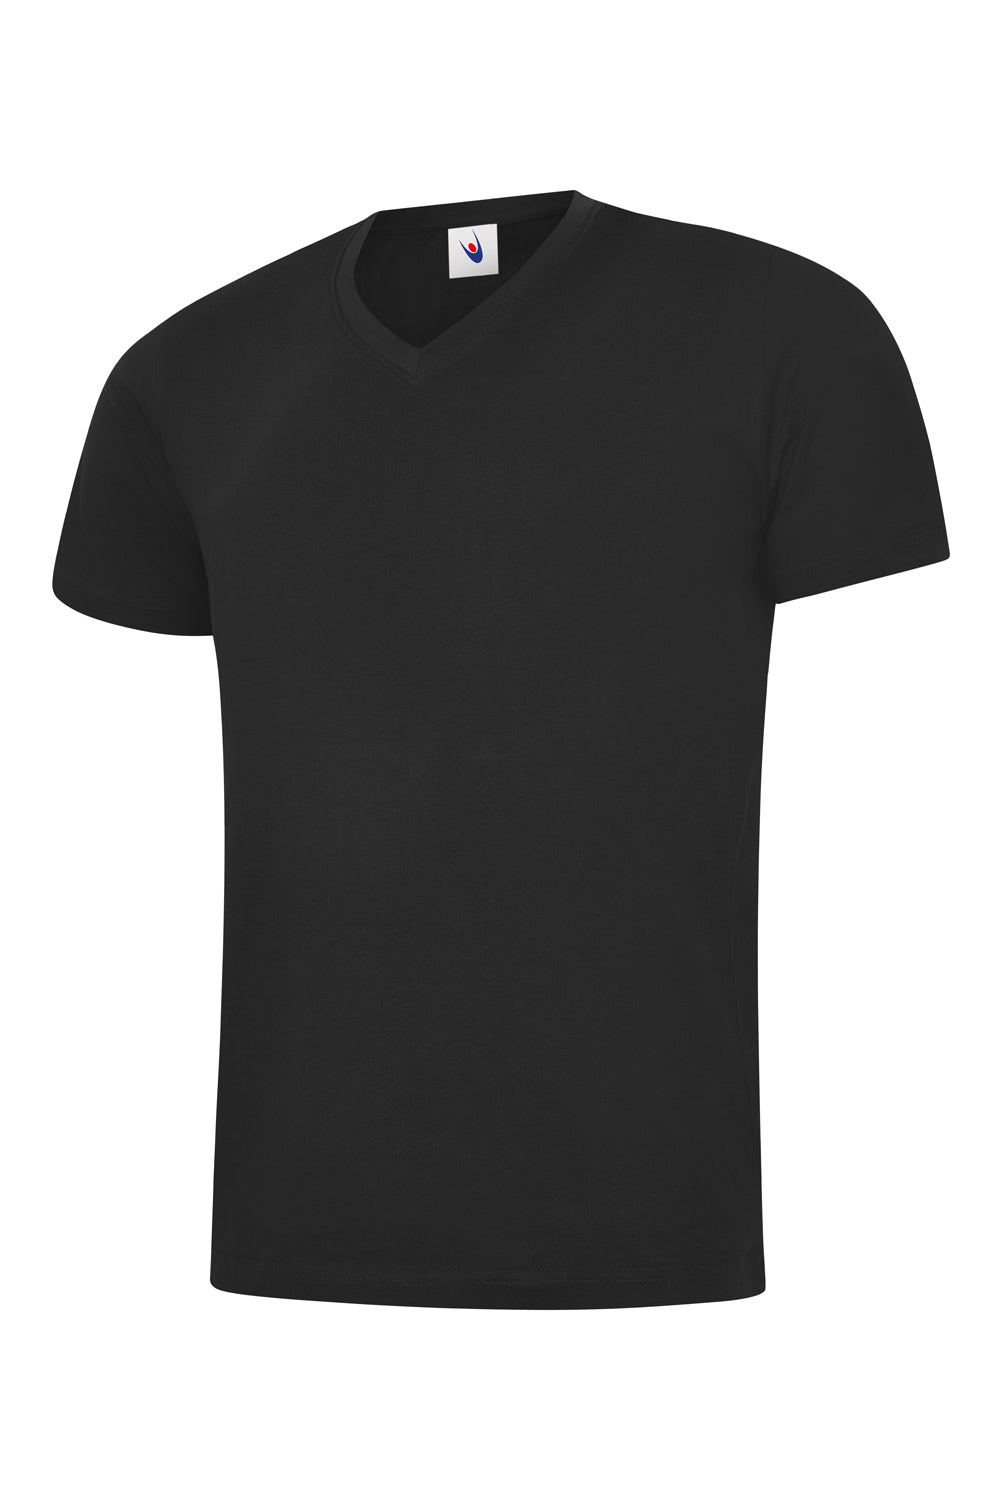 Uneek Classic V Neck T-shirt UC317 - Black